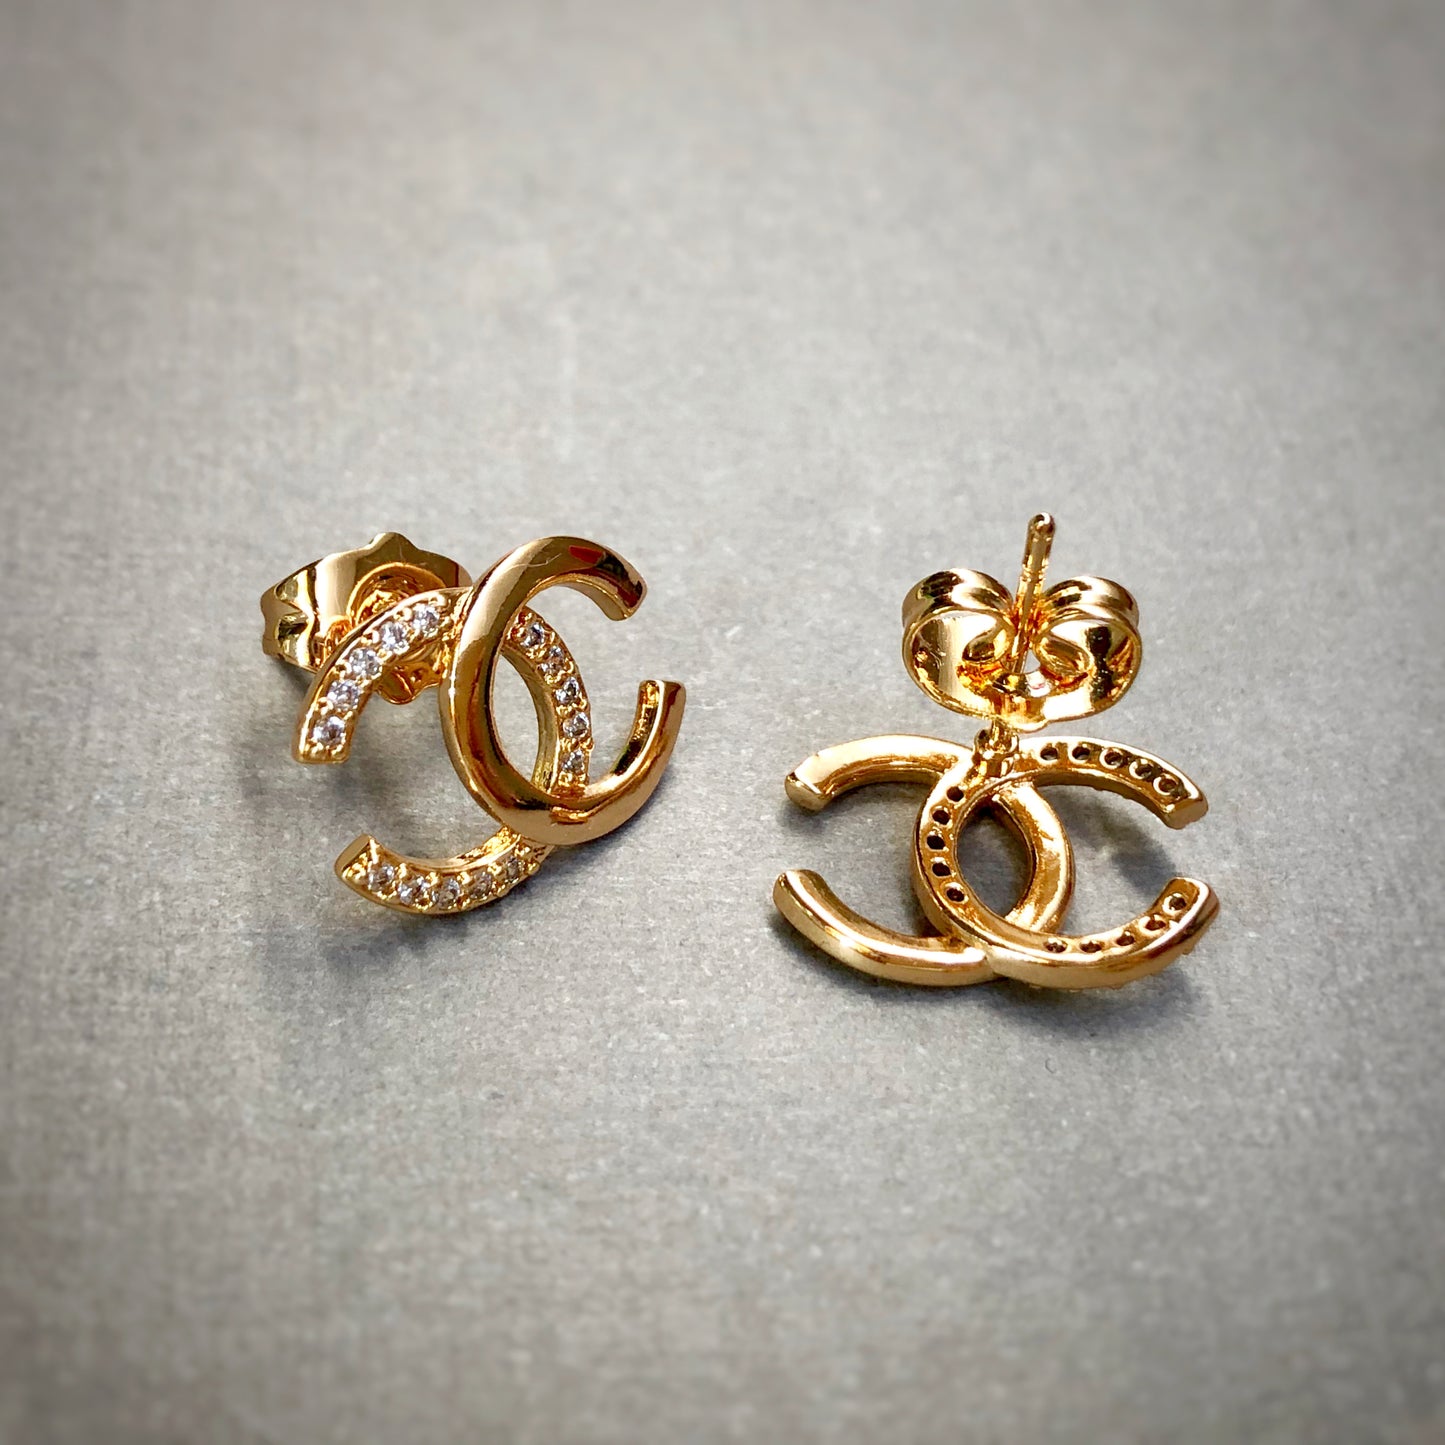 Sleek Half Studded Iconic C Earrings in Gold Tone